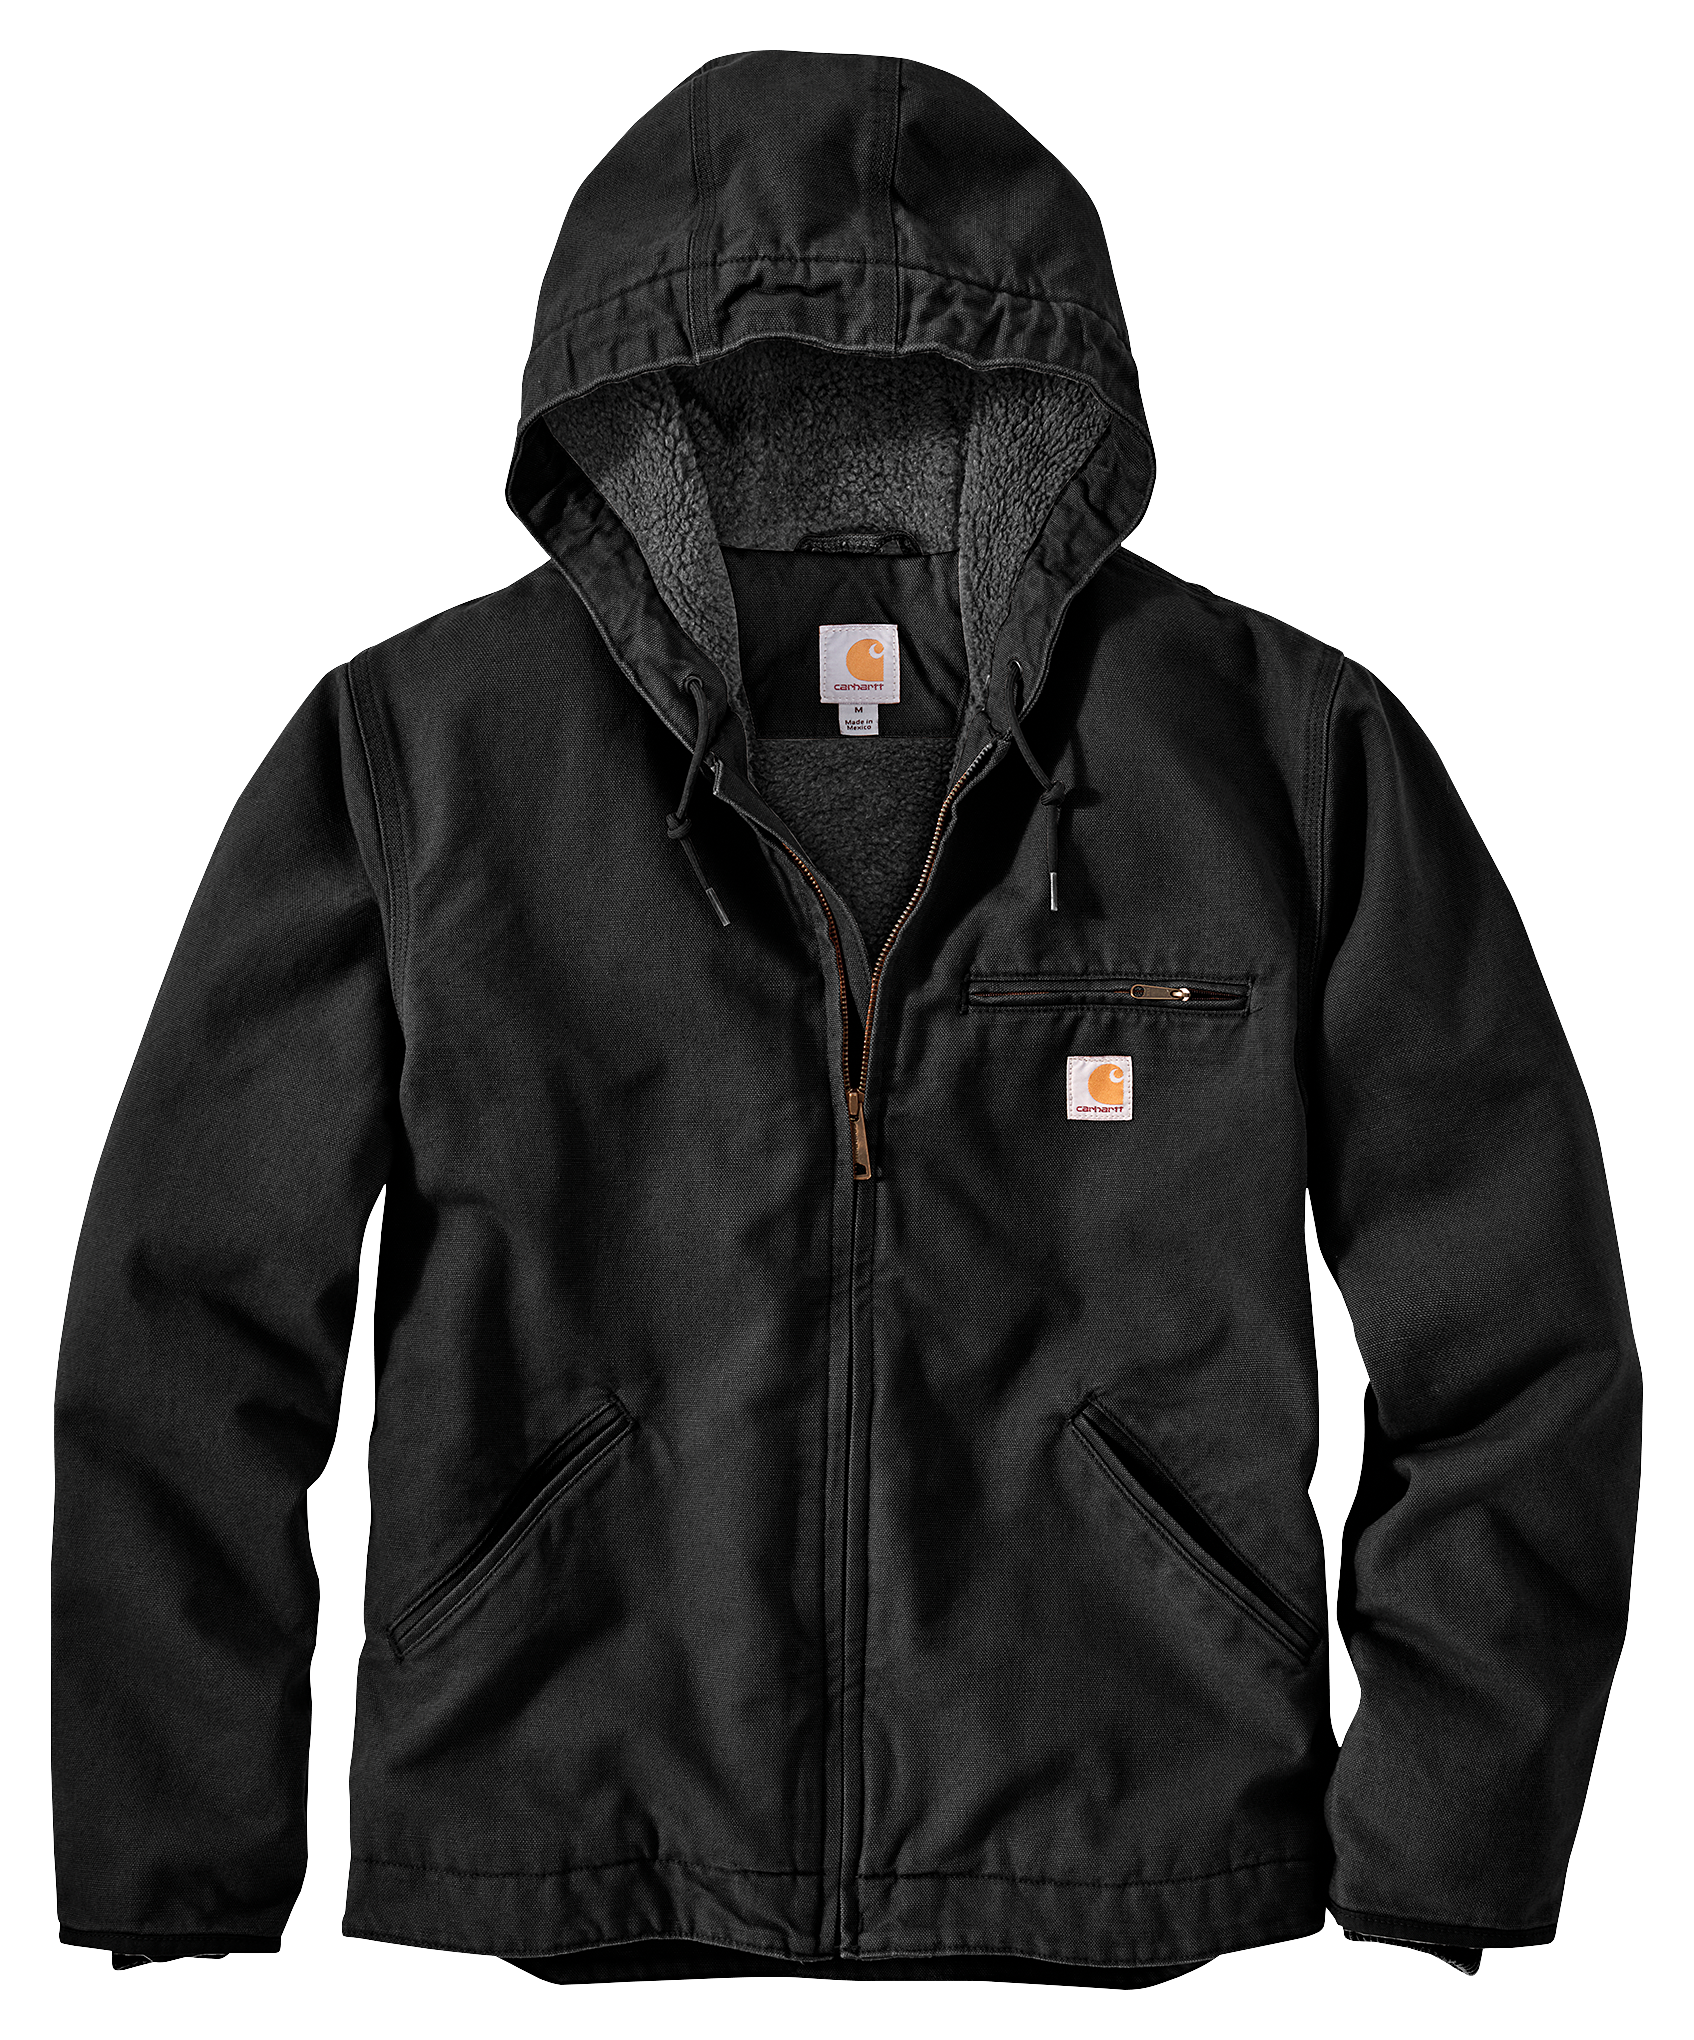 Carhartt Men's Washed Duck Sherpa Lined Jacket - Dark Brown,3XL